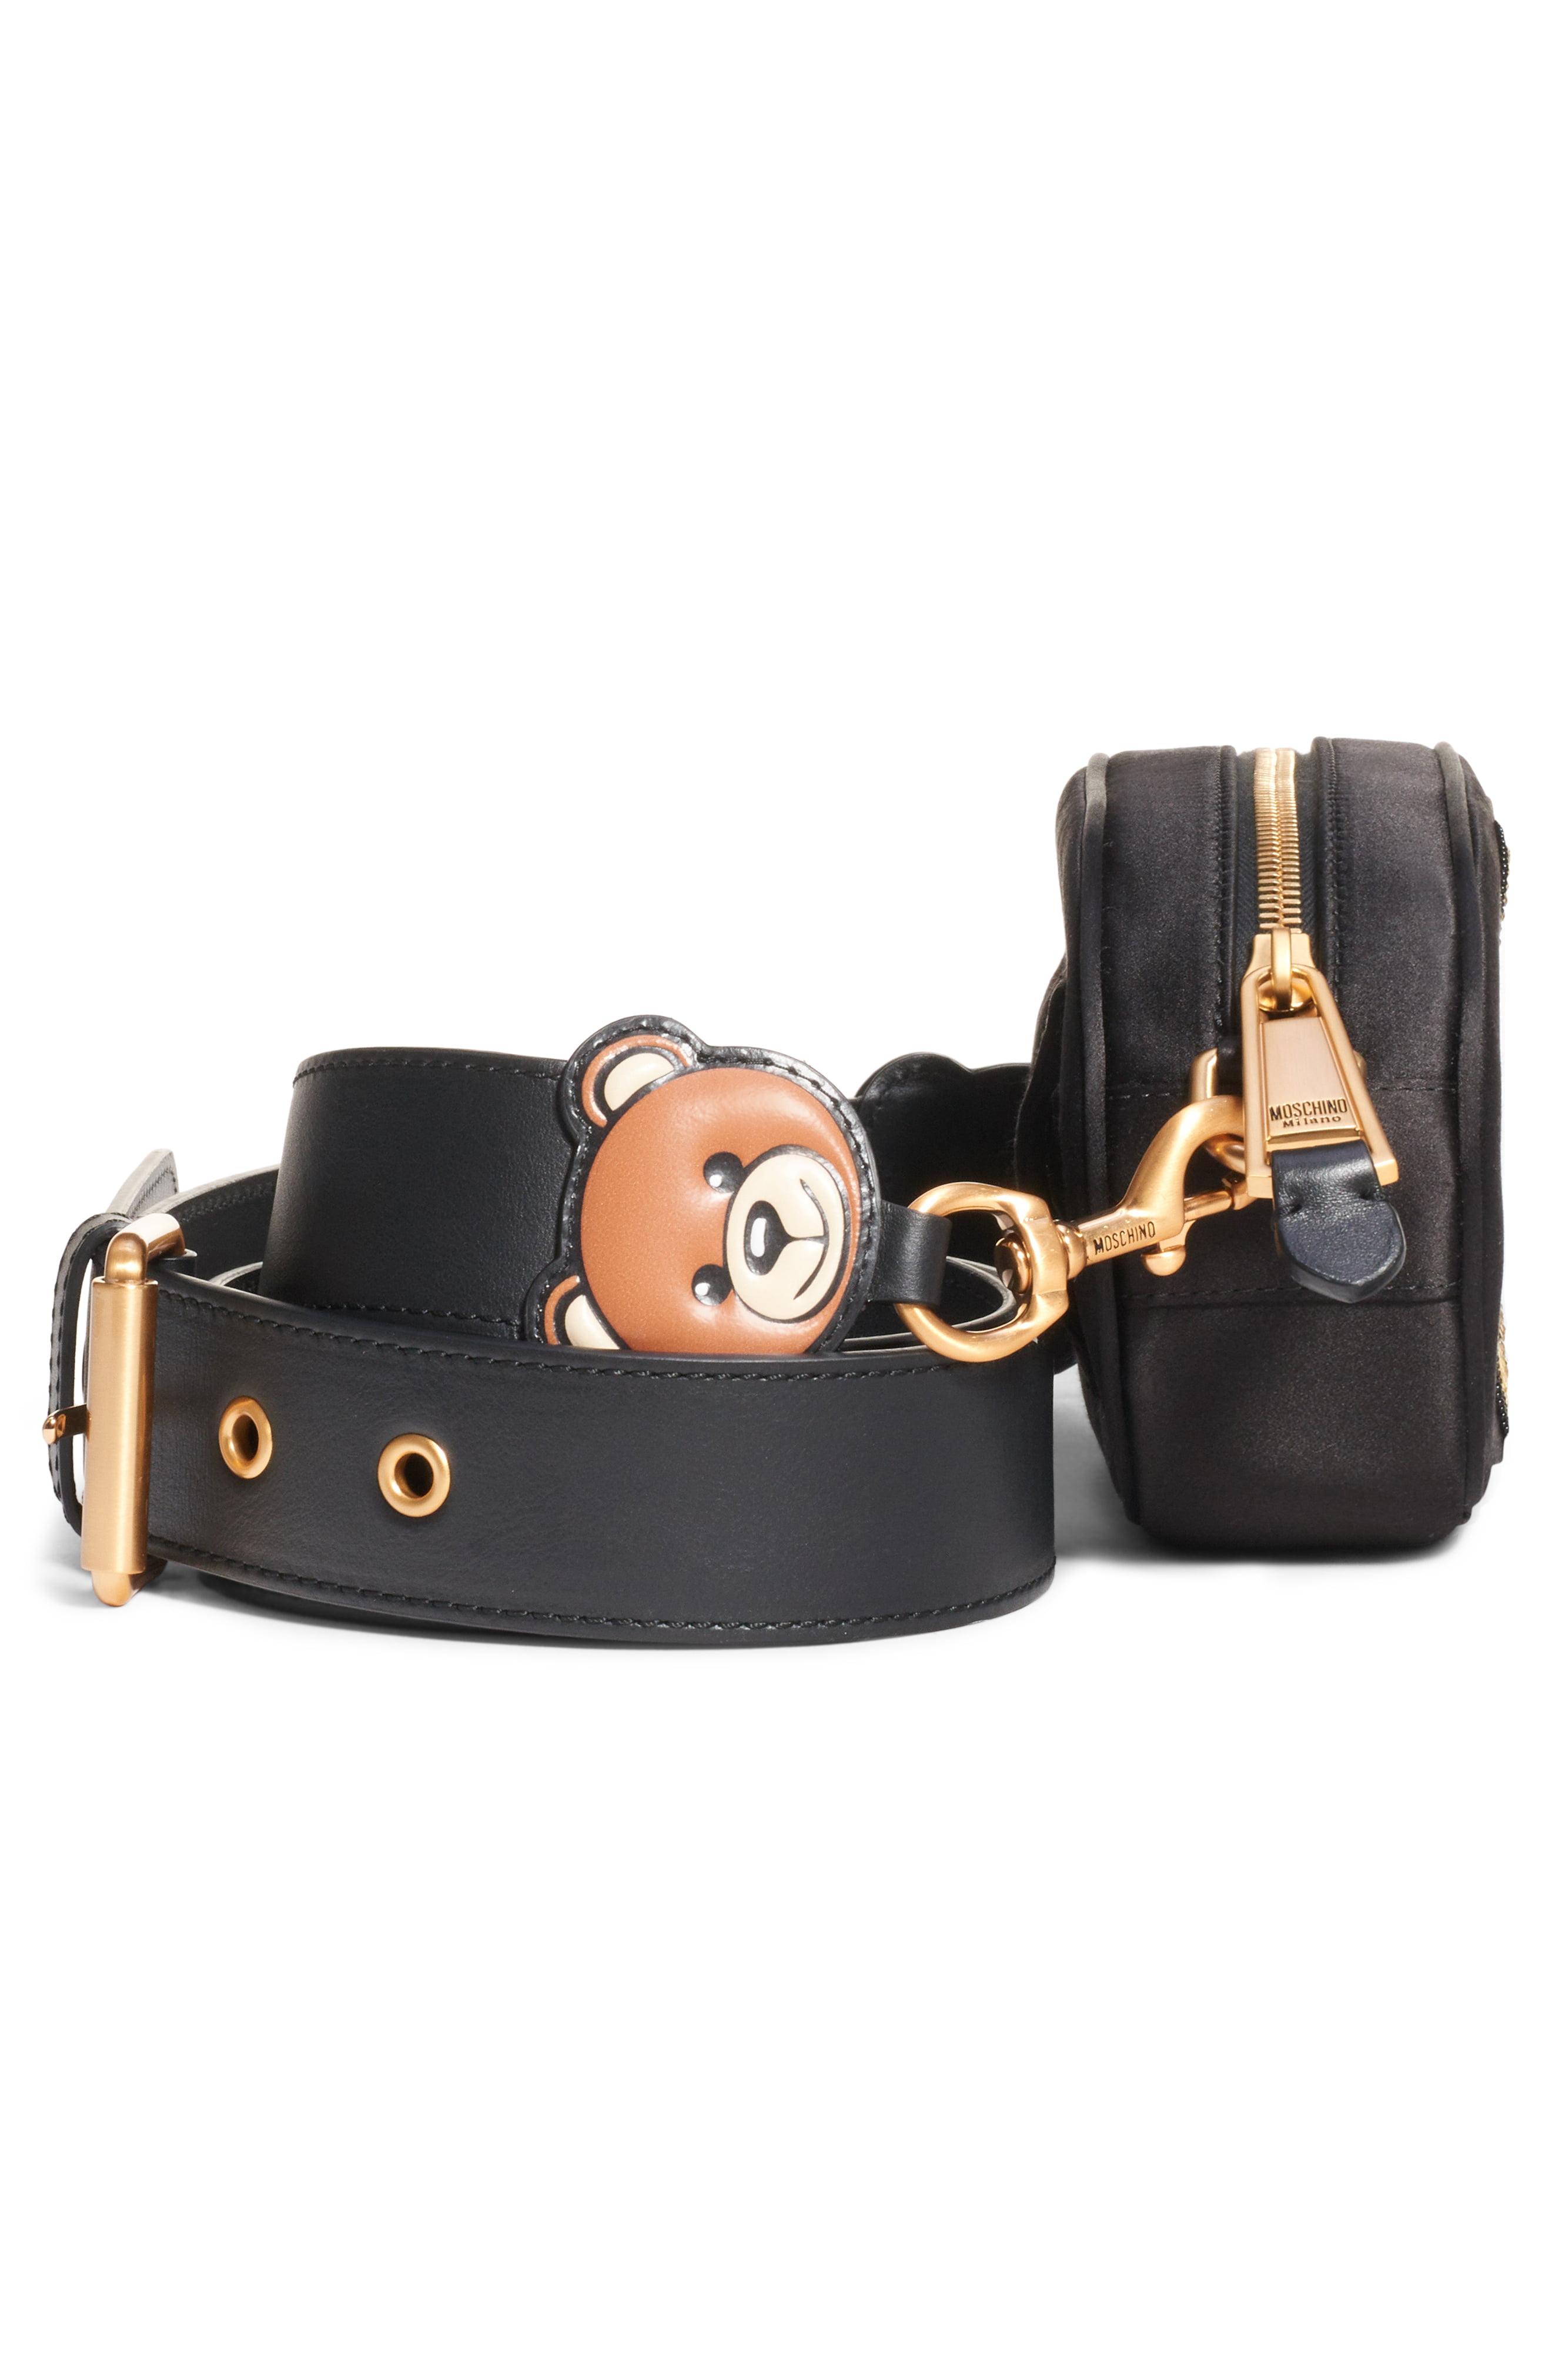 Moschino Teddy Leather Handbag Strap in 